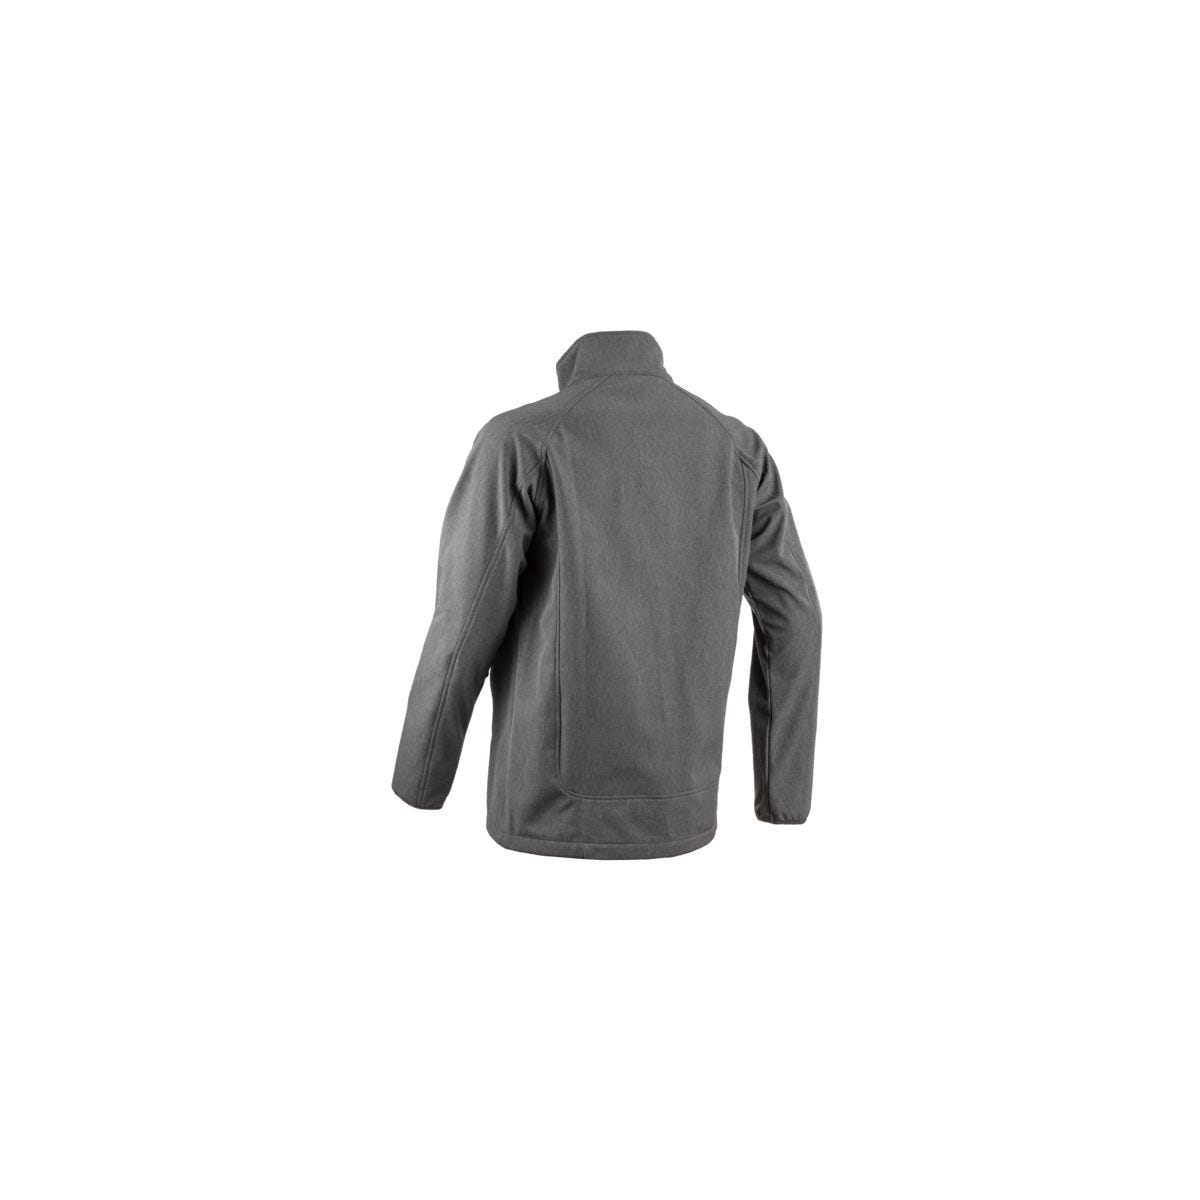 SOBA Veste Softshell gris chiné, homme, 310g/m² - COVERGUARD - Taille XL 1